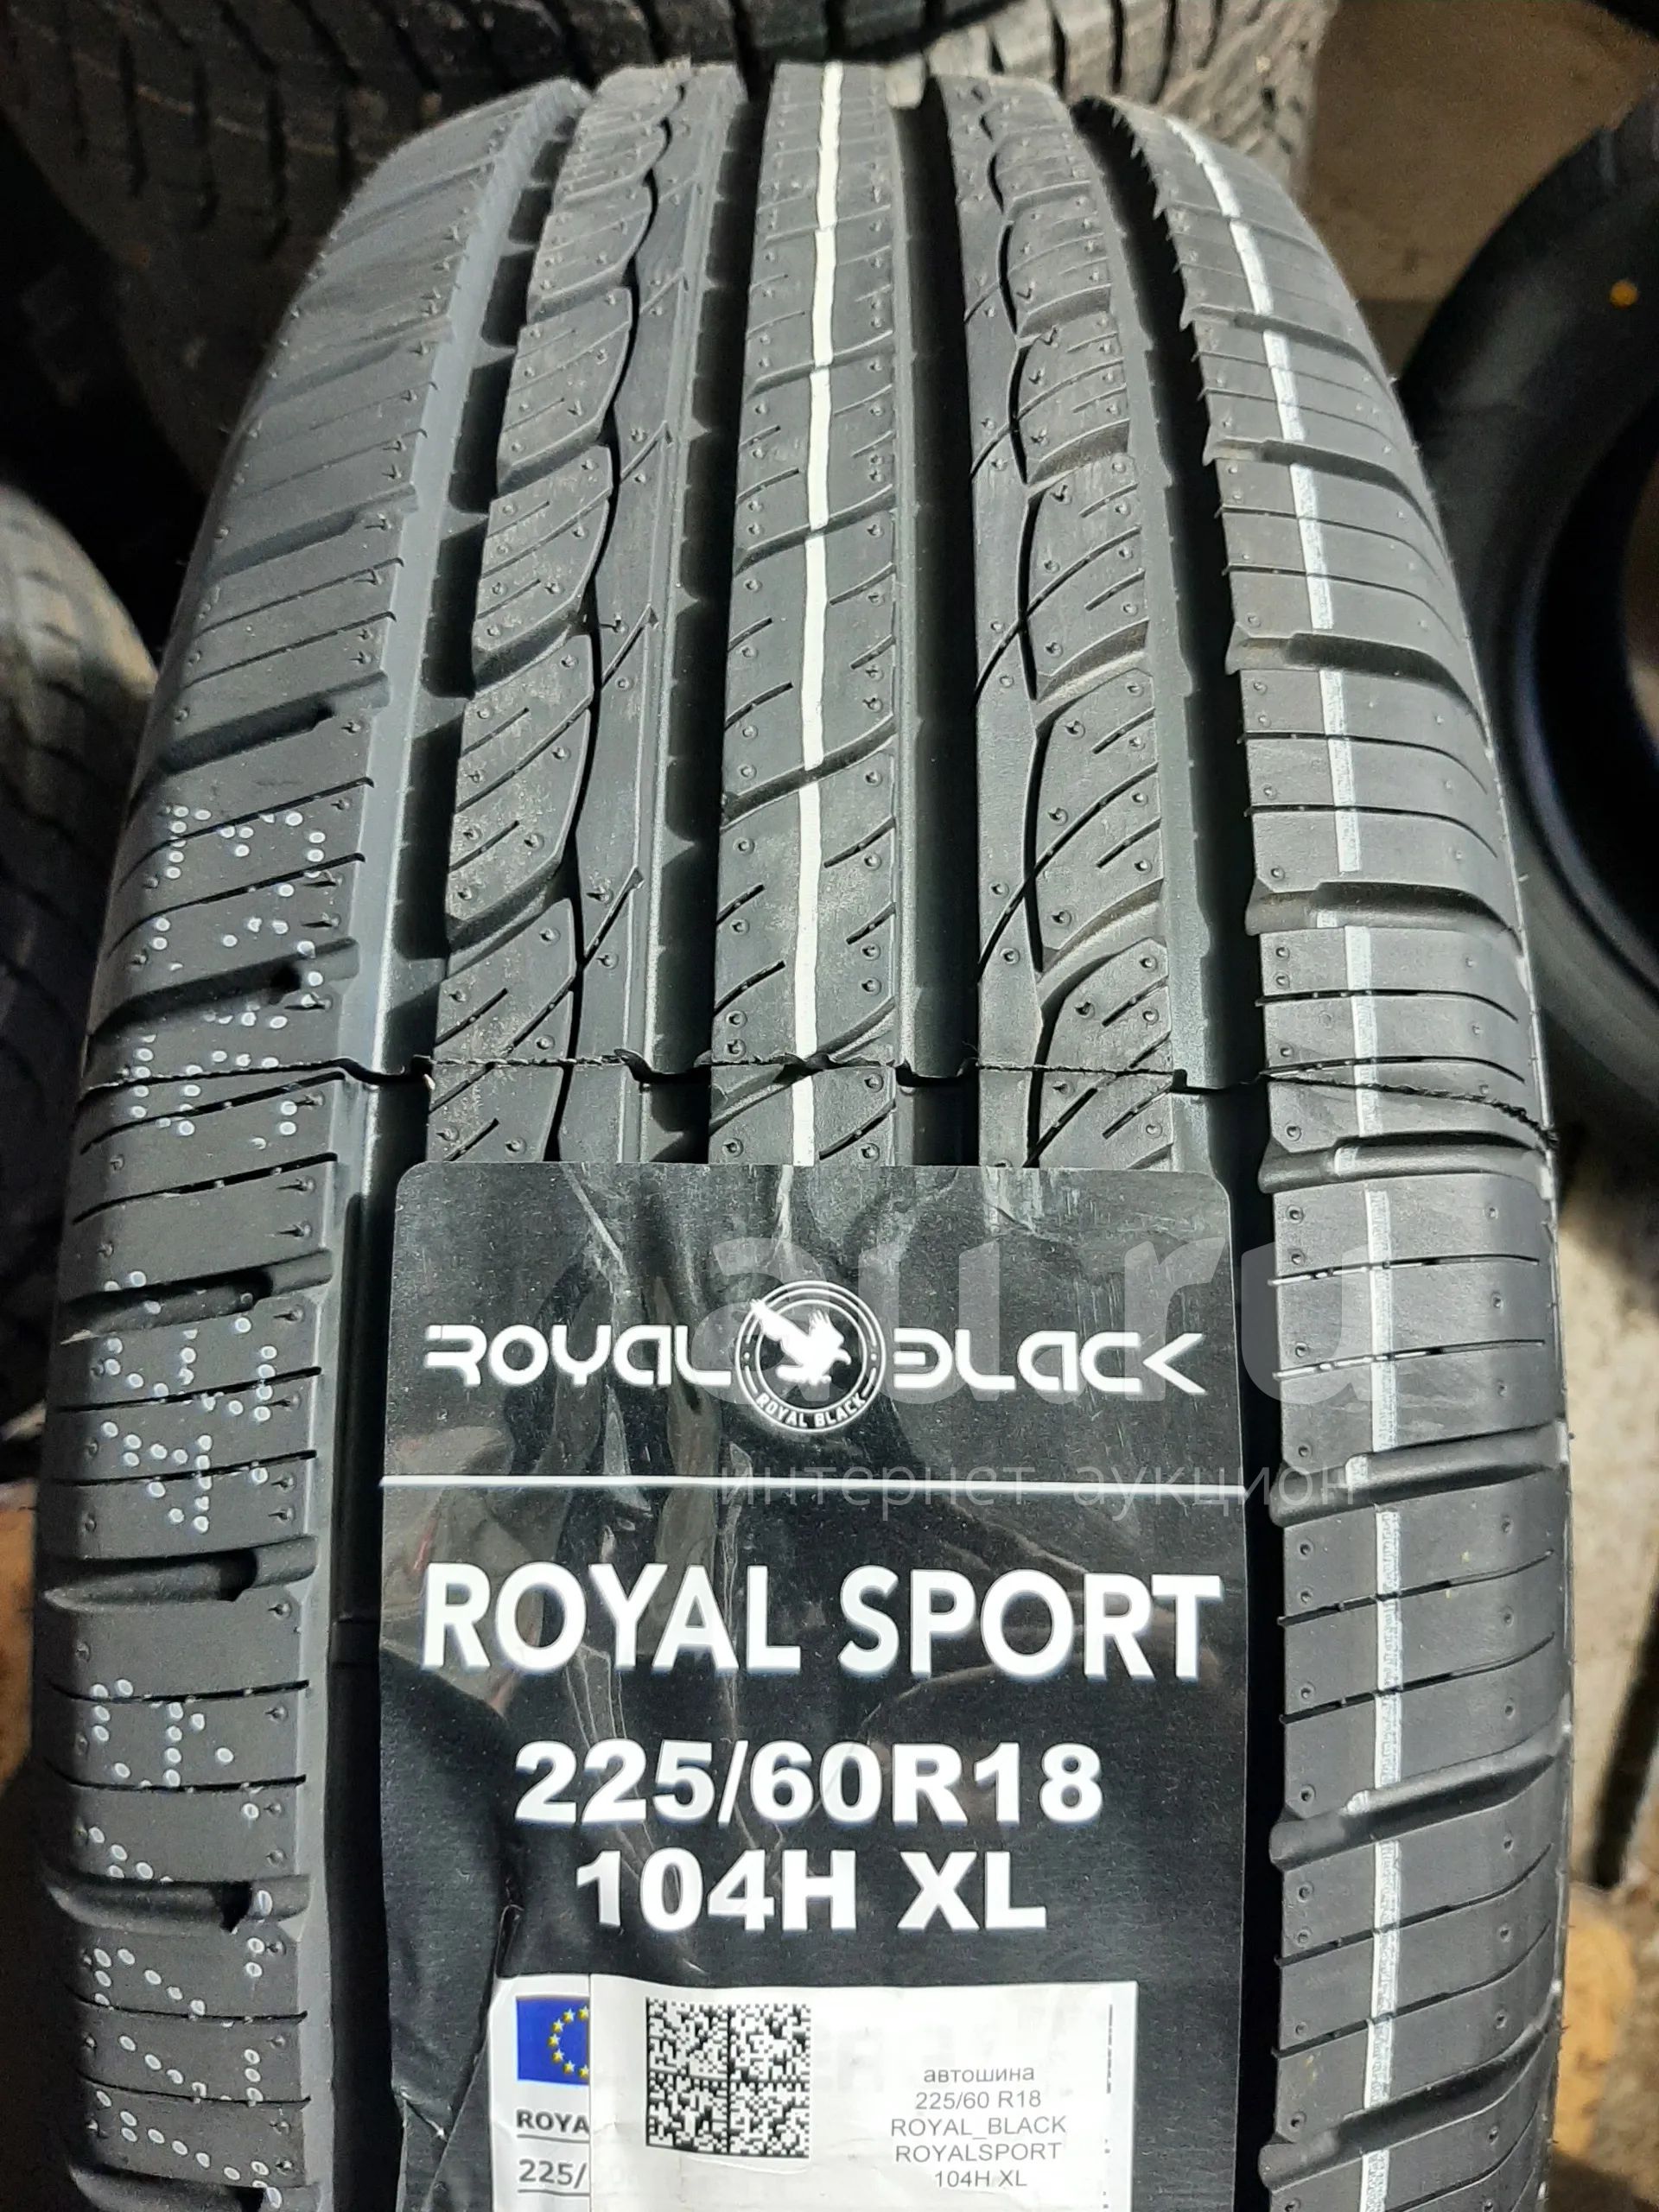 Автошина Royal Black ROYALSPORT 225/60 r17 99h. Шины Royal Black Royal Sport. Royal Black 225/55r18 Royal Sport 98h. Royal Black ROYALSPORT 104h XL отзывы.